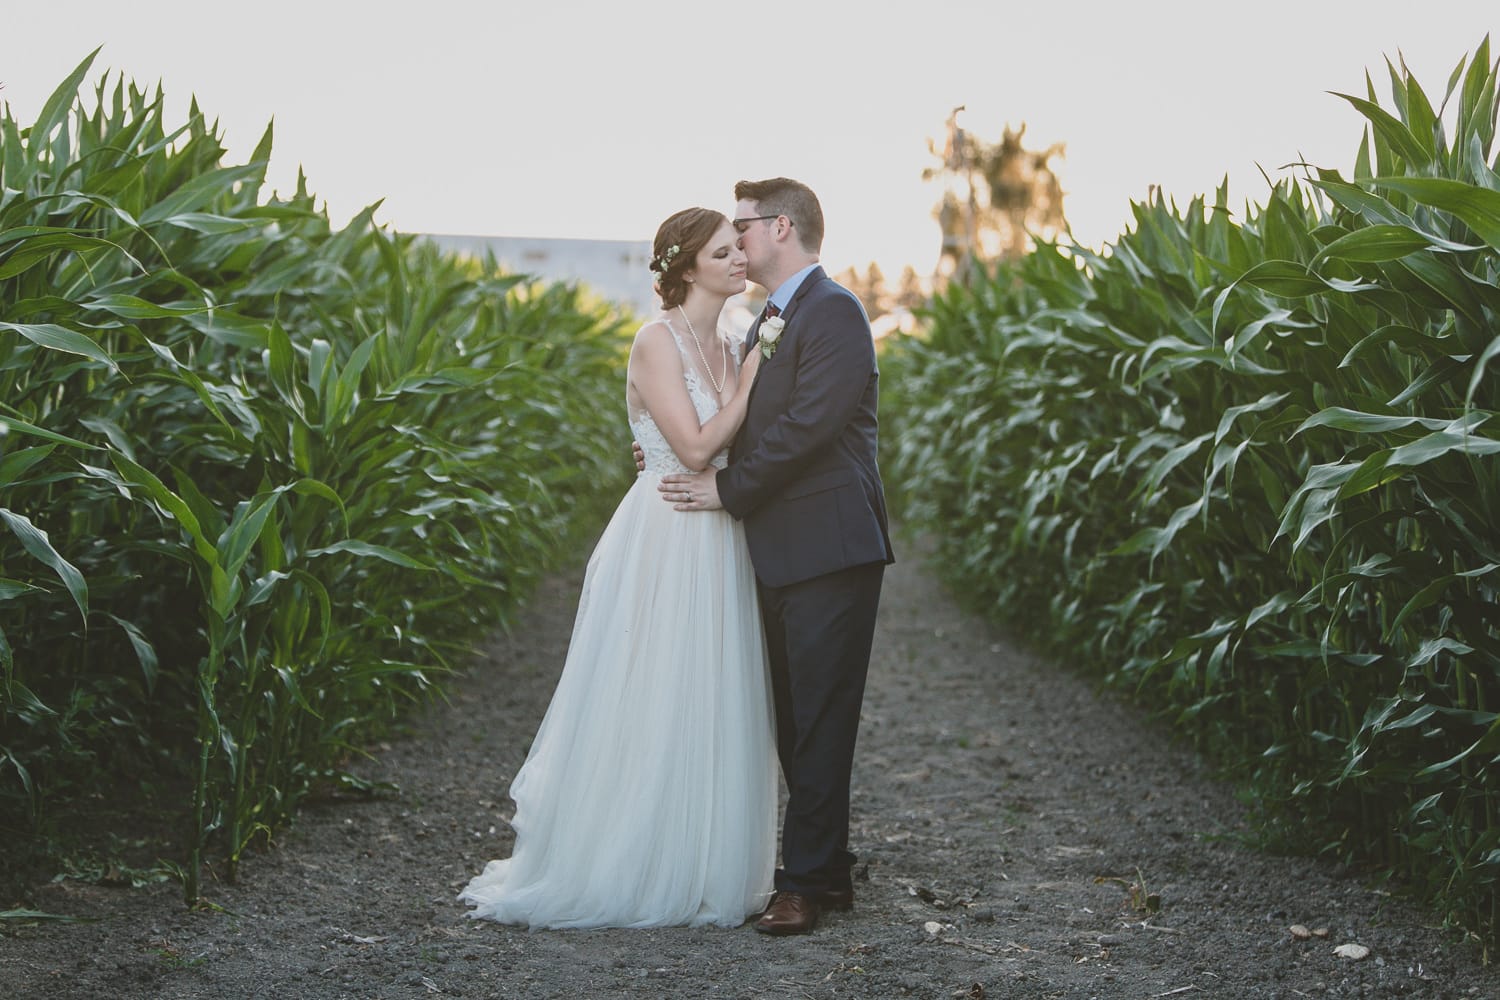 couples portrait in cornfield at barn wedding in pitt meadows